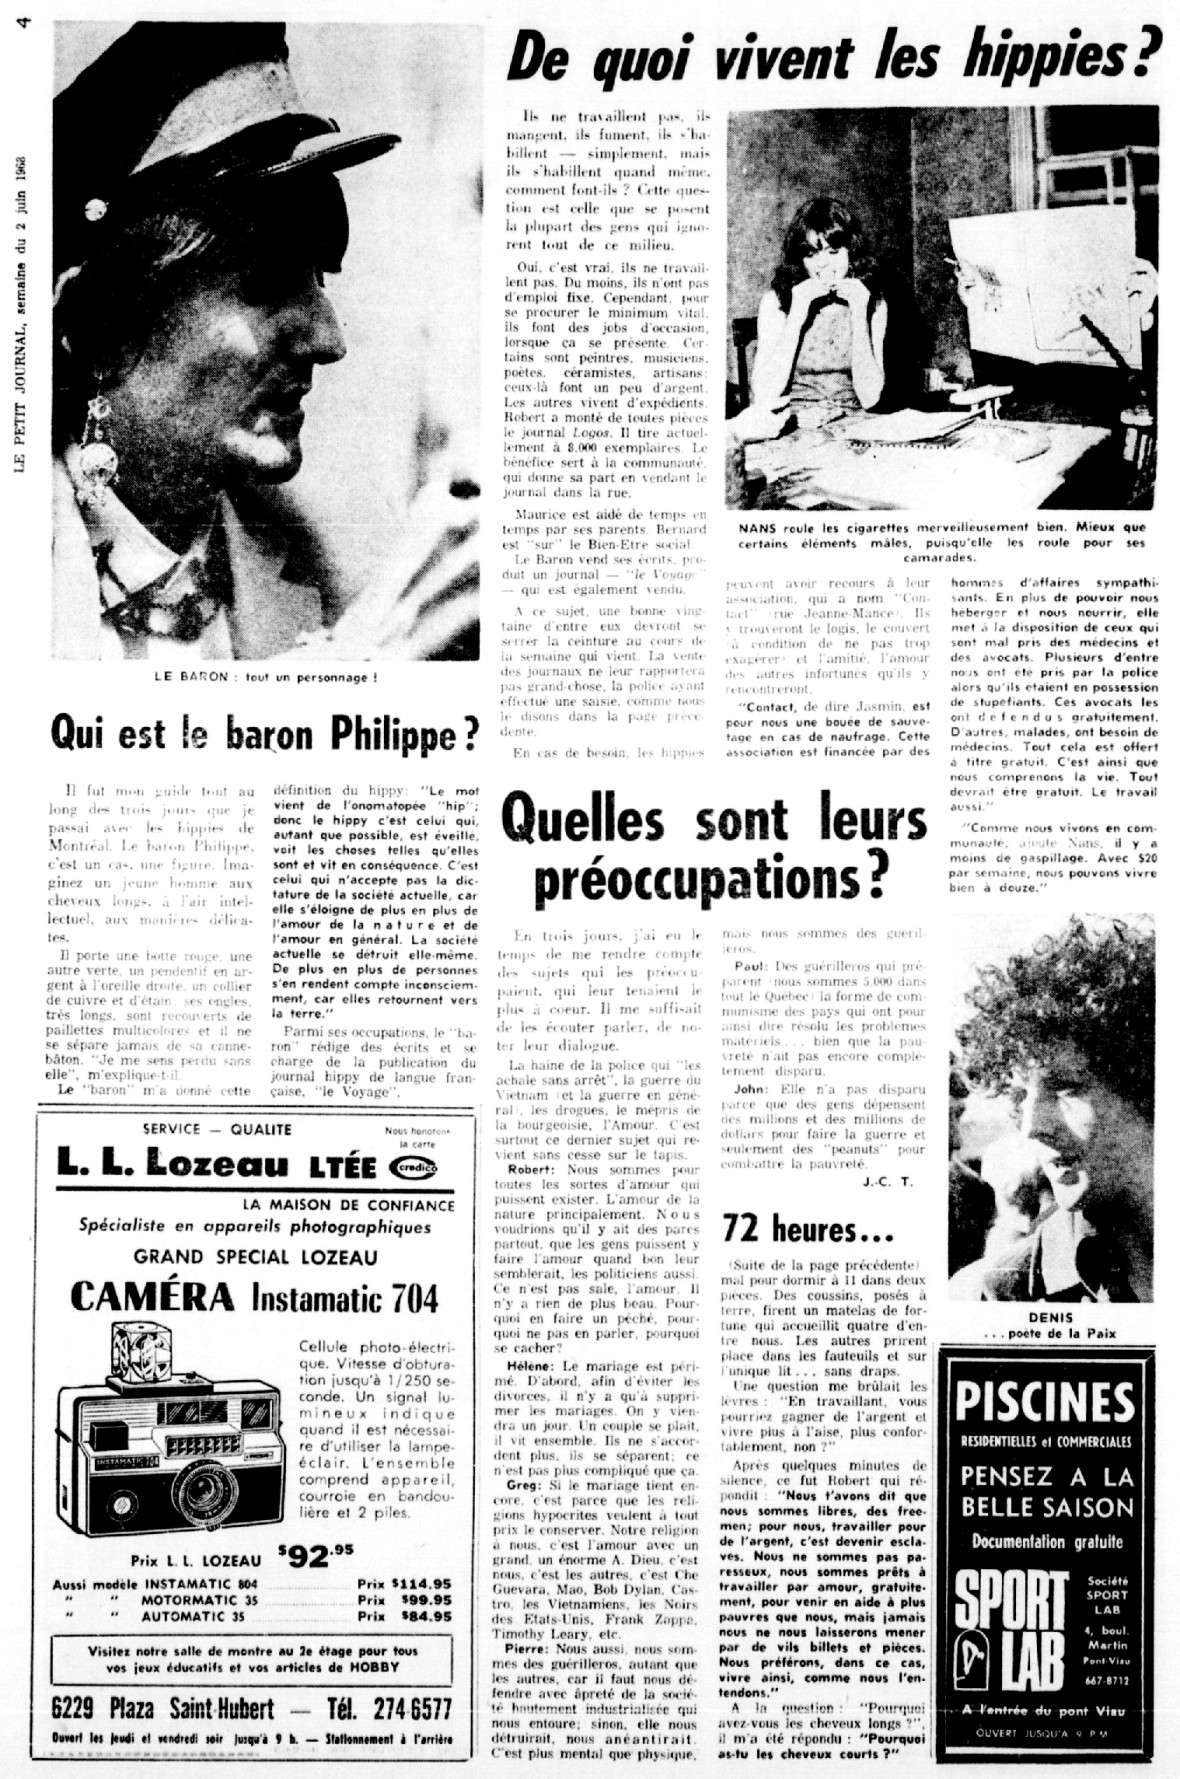 Petit Journal, juin 1968 (source: BAnQ).